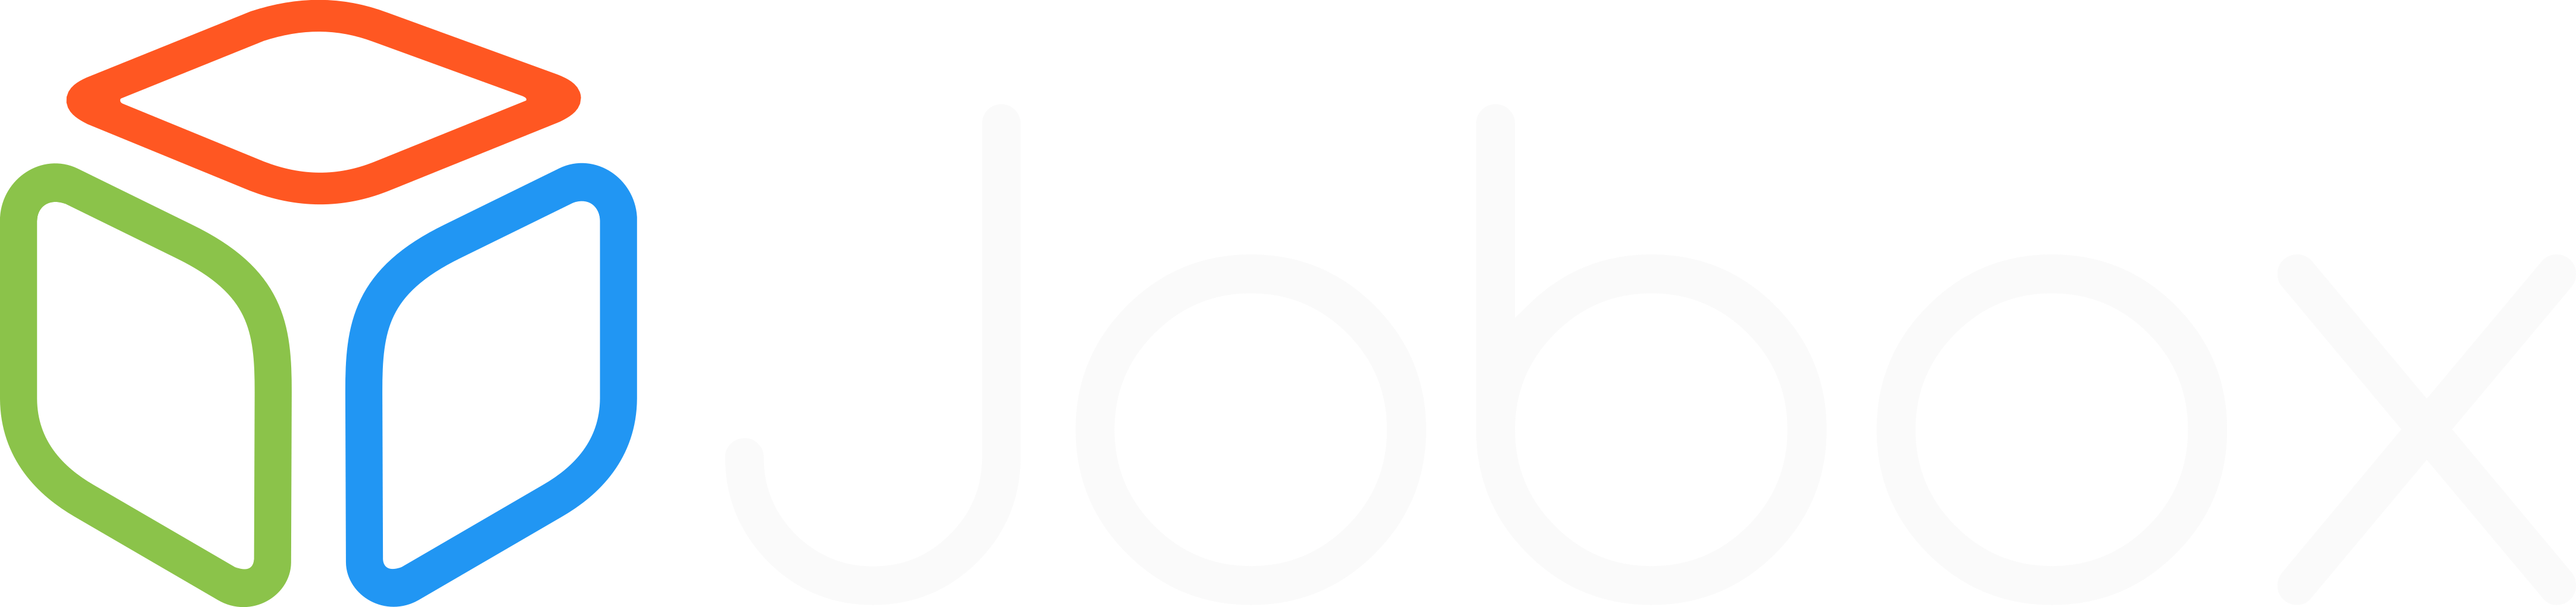 Jobox Logo - Jobox